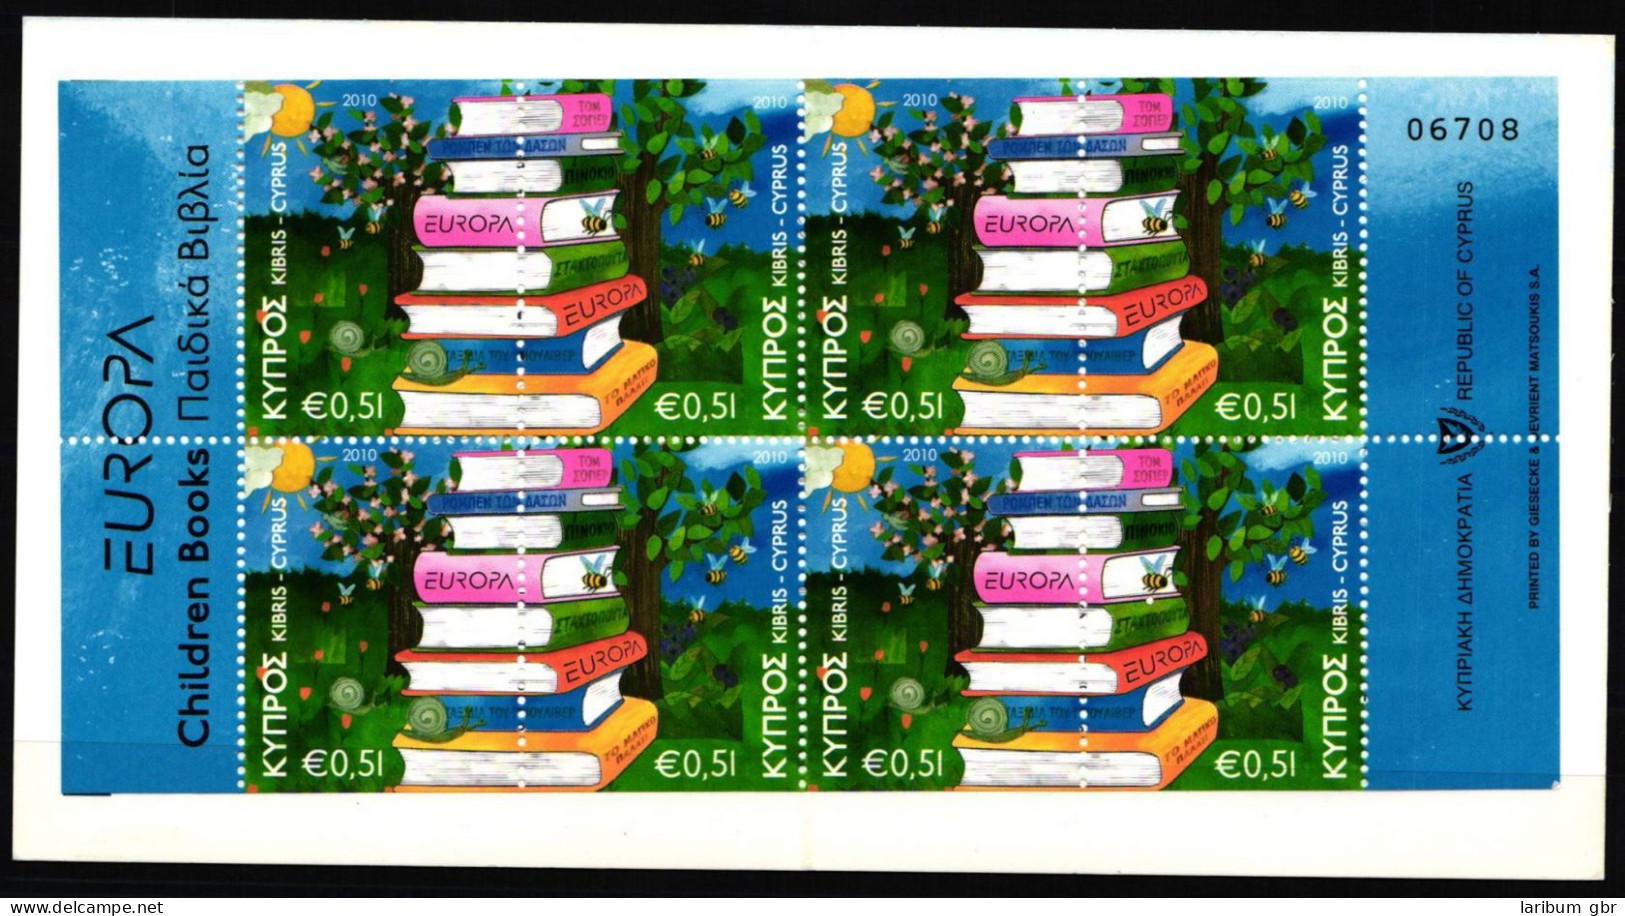 Zypern MH 15 Postfrisch Cept 2010 #NF503 - Used Stamps